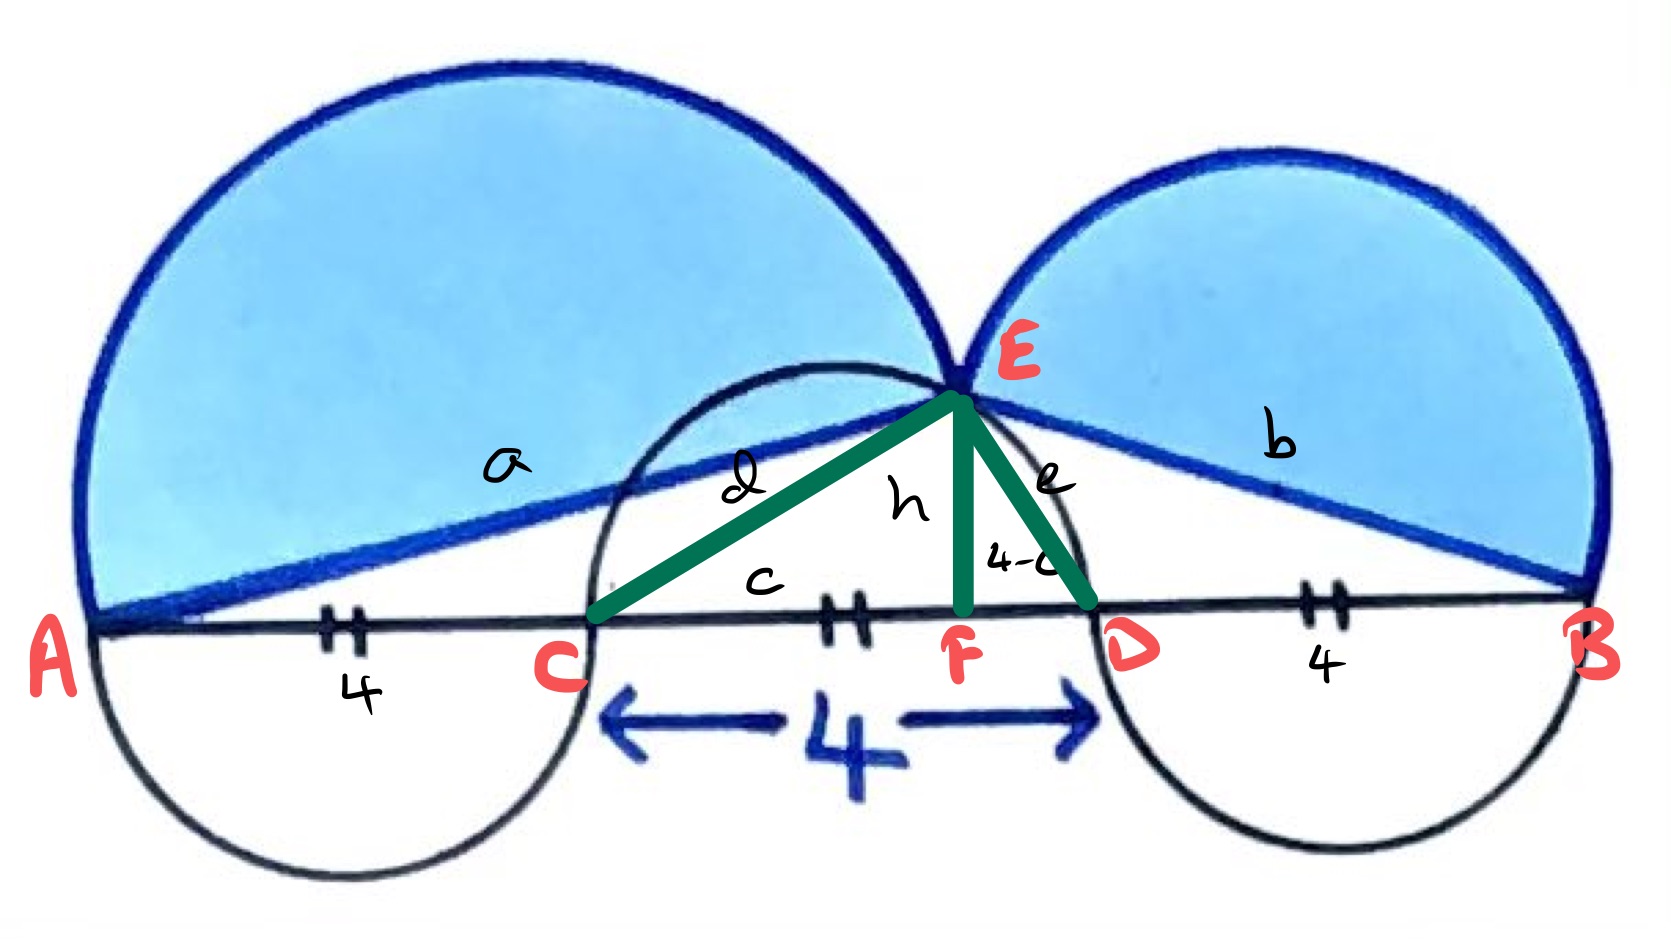 Five semi-circles labelled